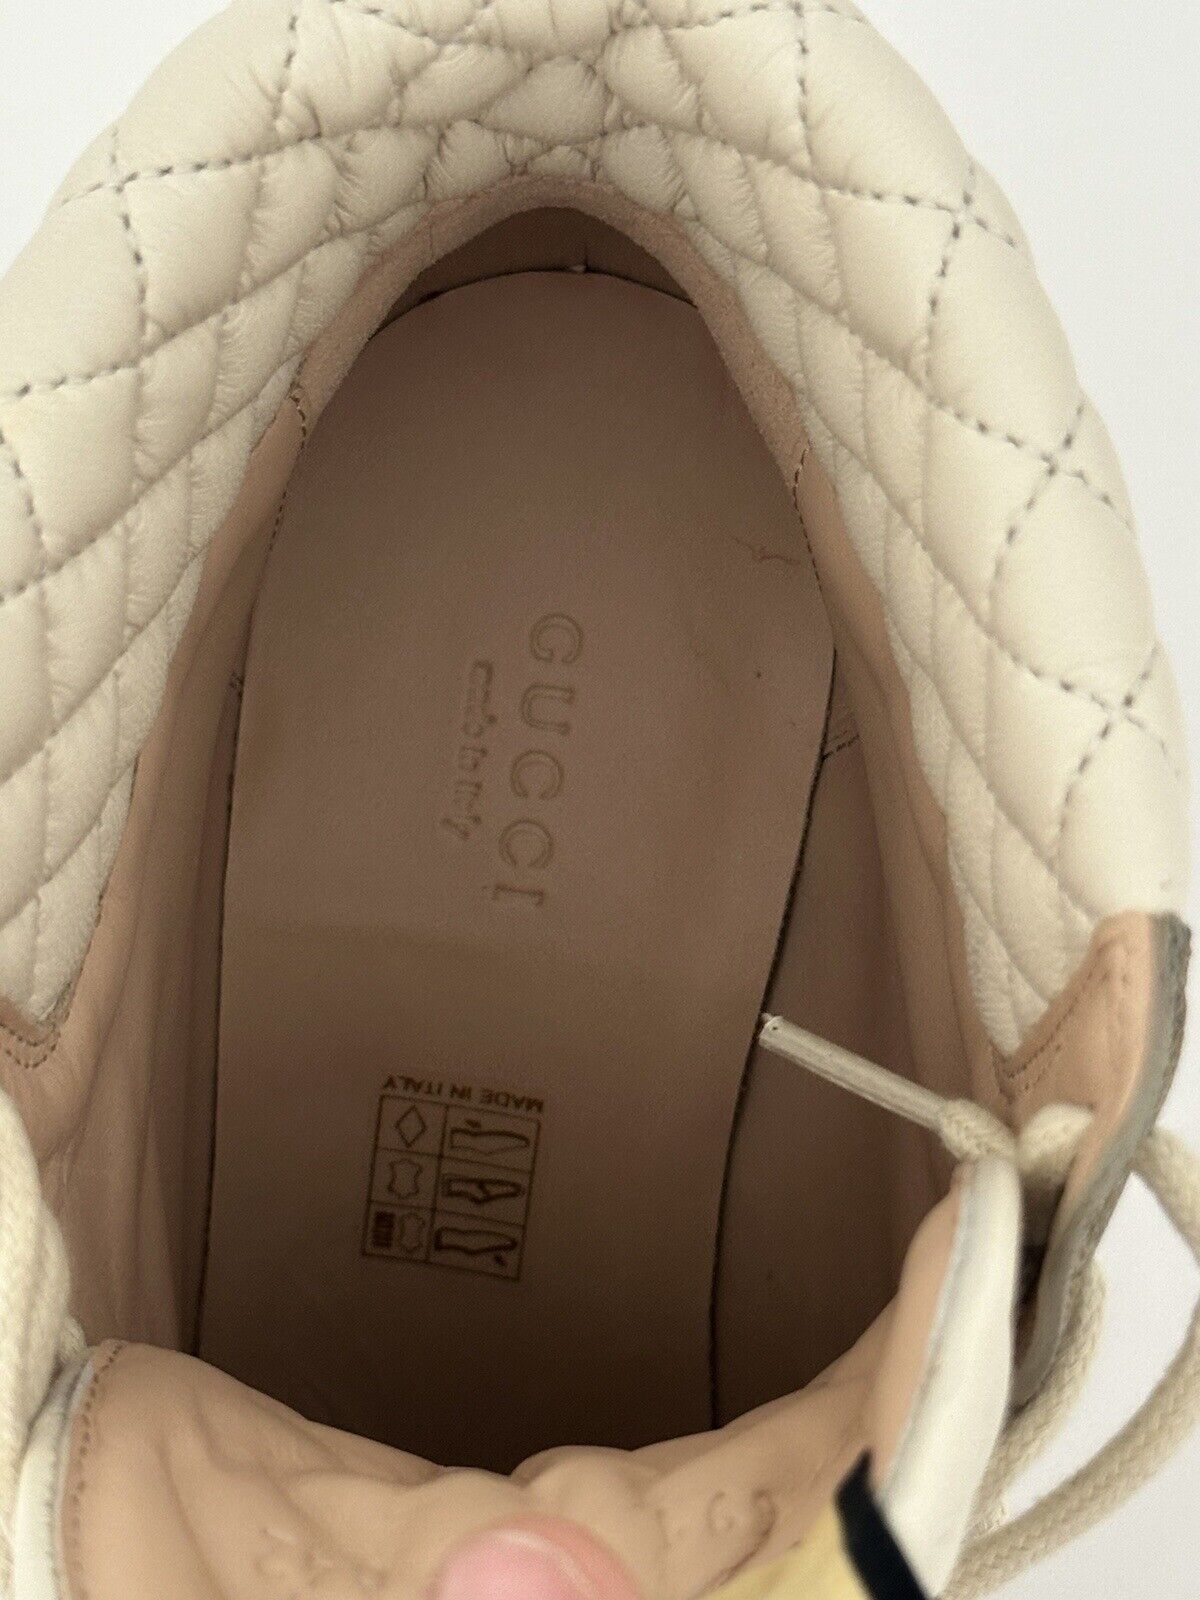 Gucci  Women's GG Supreme Leather Beige Boots 9 US (39 Euro) 659691 IT NIB